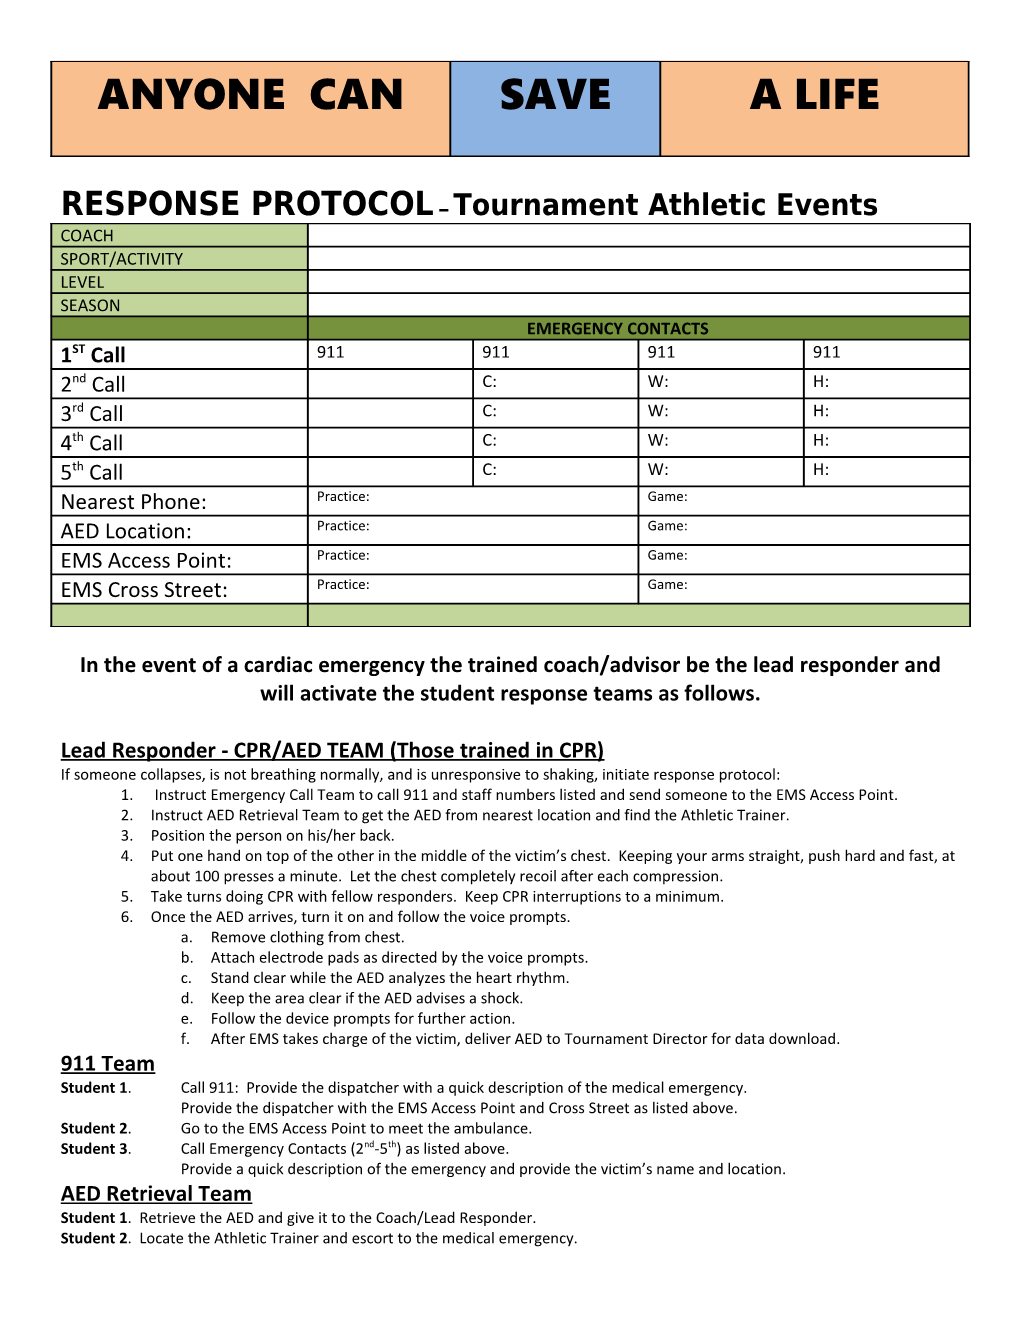 RESPONSE PROTOCOL Tournamentathletic Events